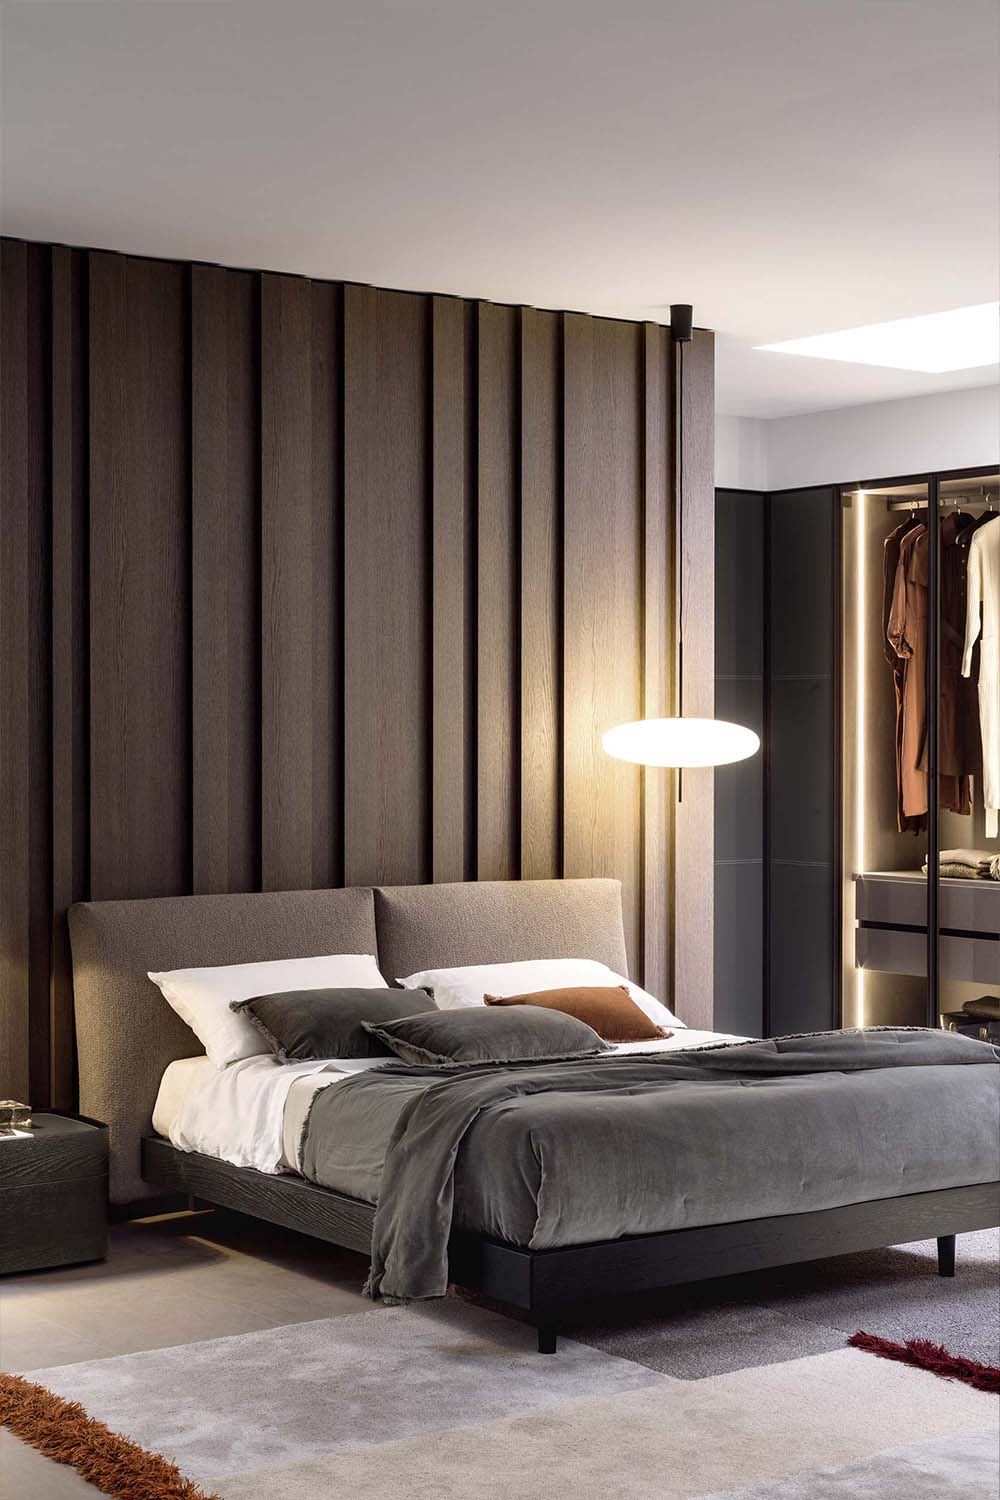 Twice luxury, modern, contemporary Italian bed by Novamobili. Sold by Krieder UK.